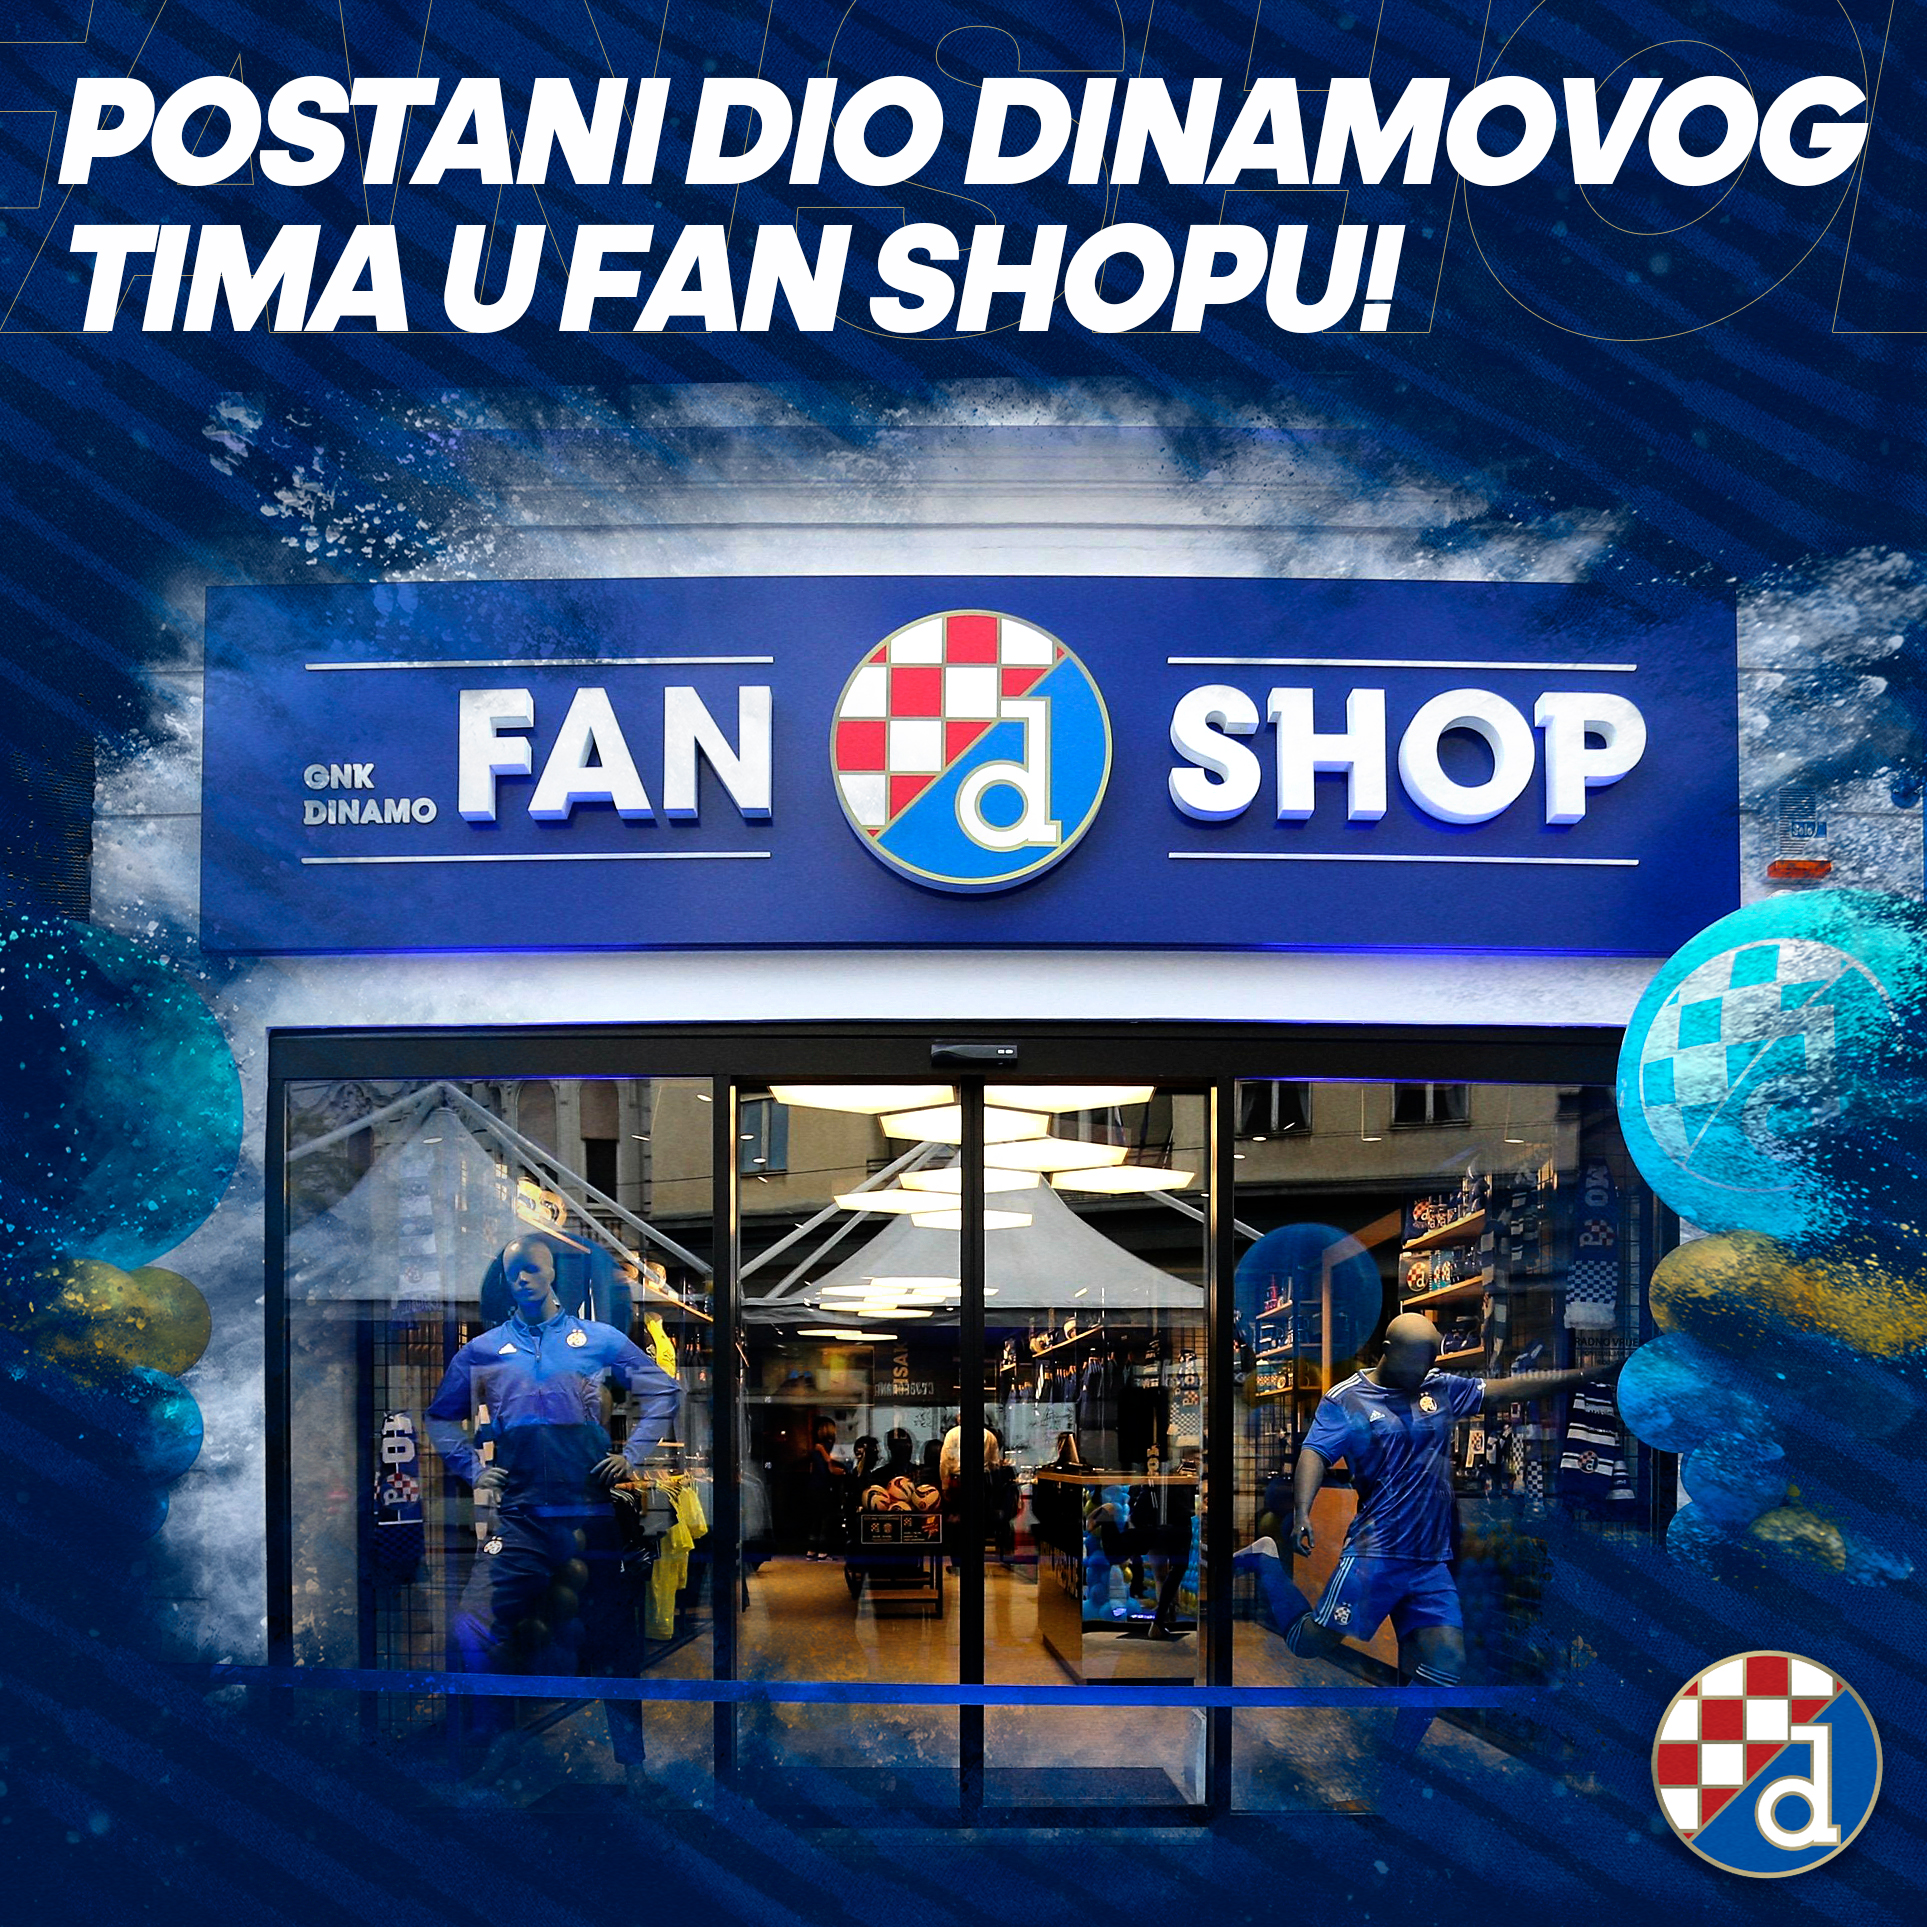 dio Dinamovog u fan shopu! | Dinamo Zagreb